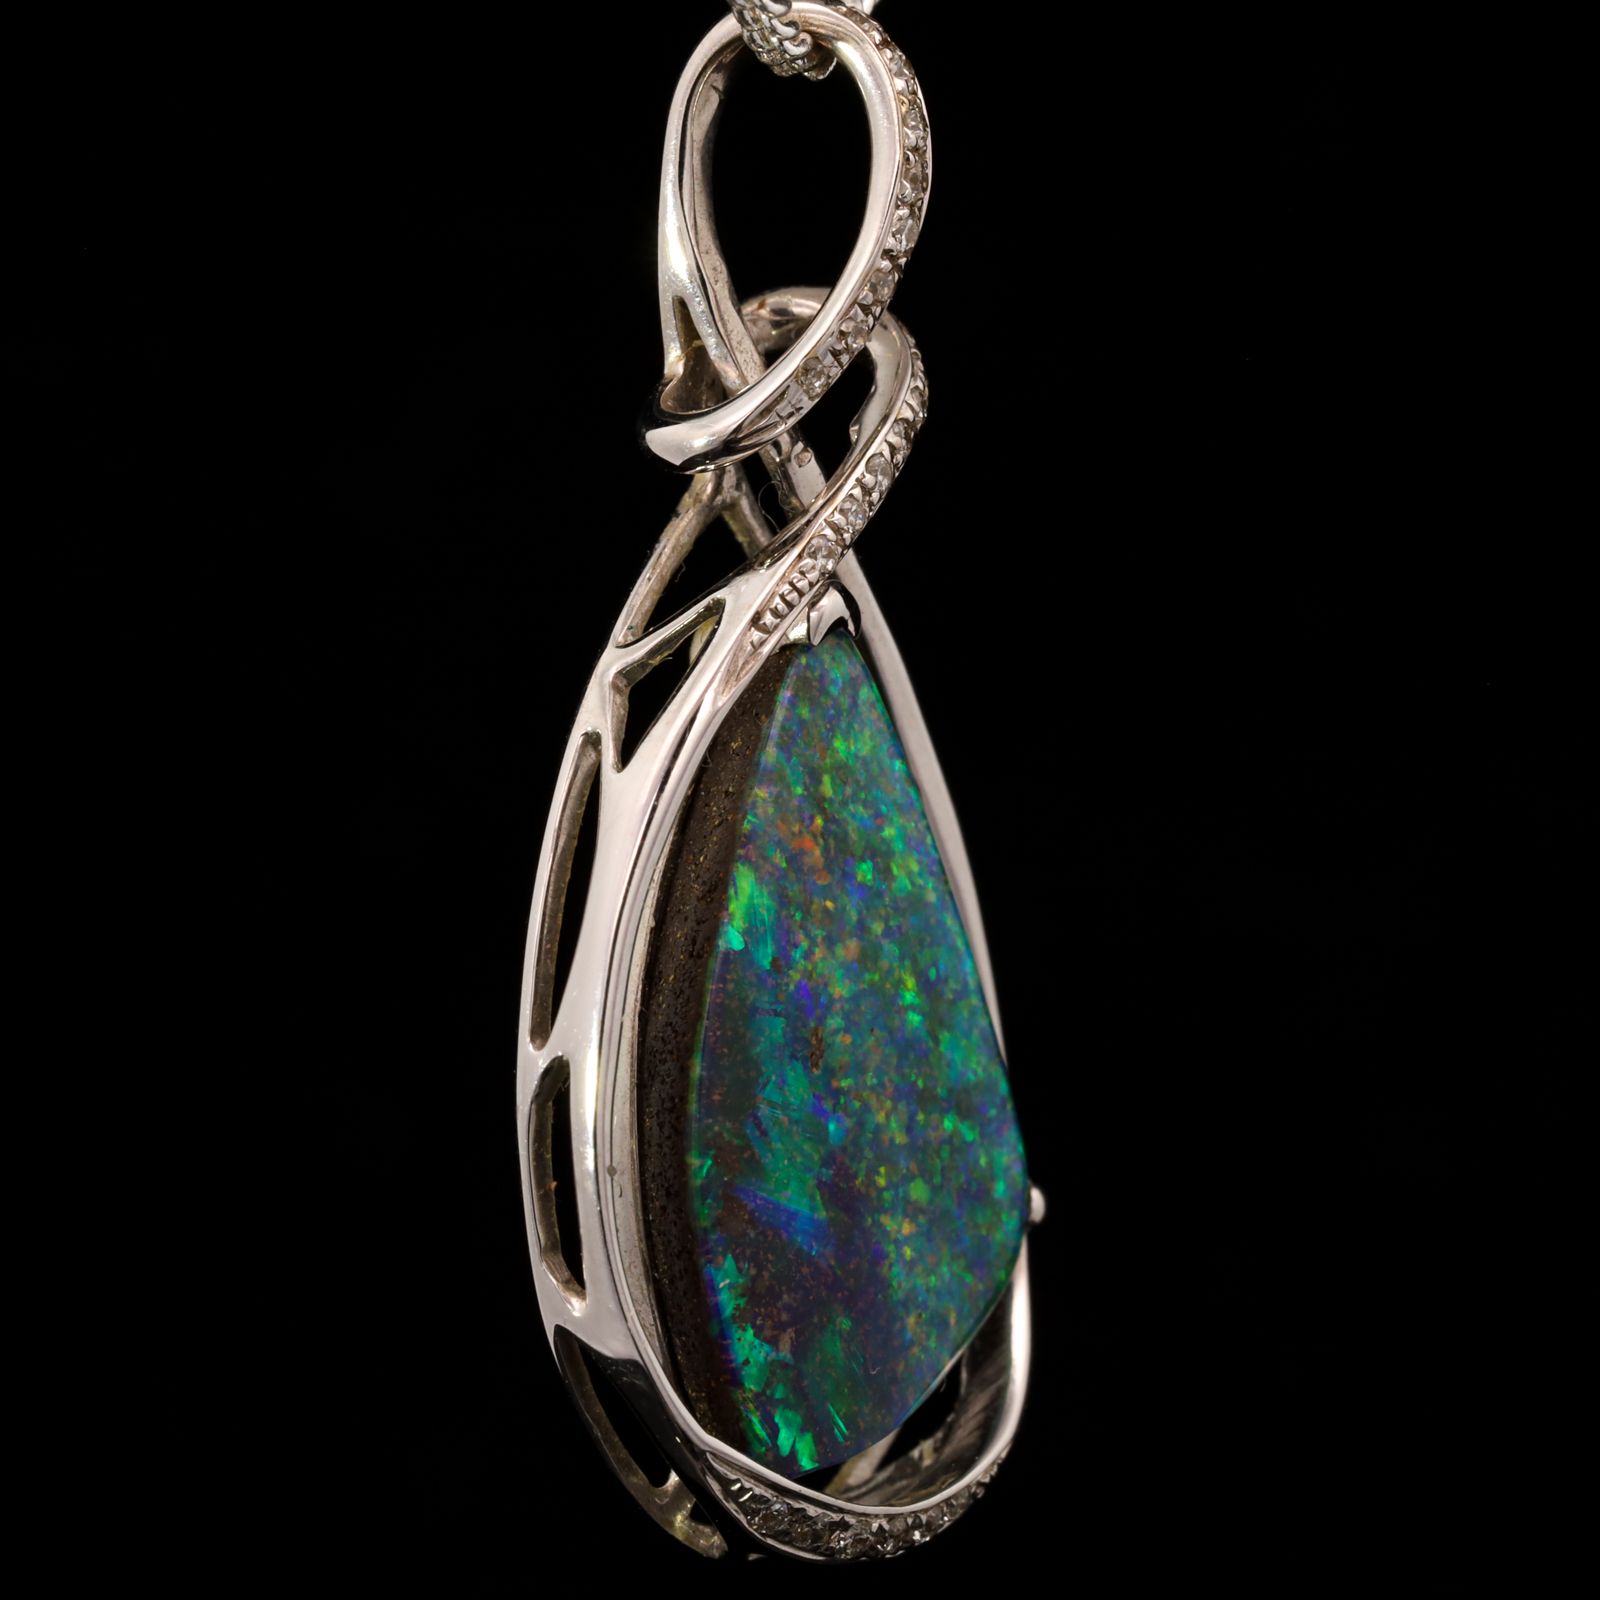 Premium White Gold Blue Pink Green Solid Australian Boulder Opal Necklace Pendant with Diamonds